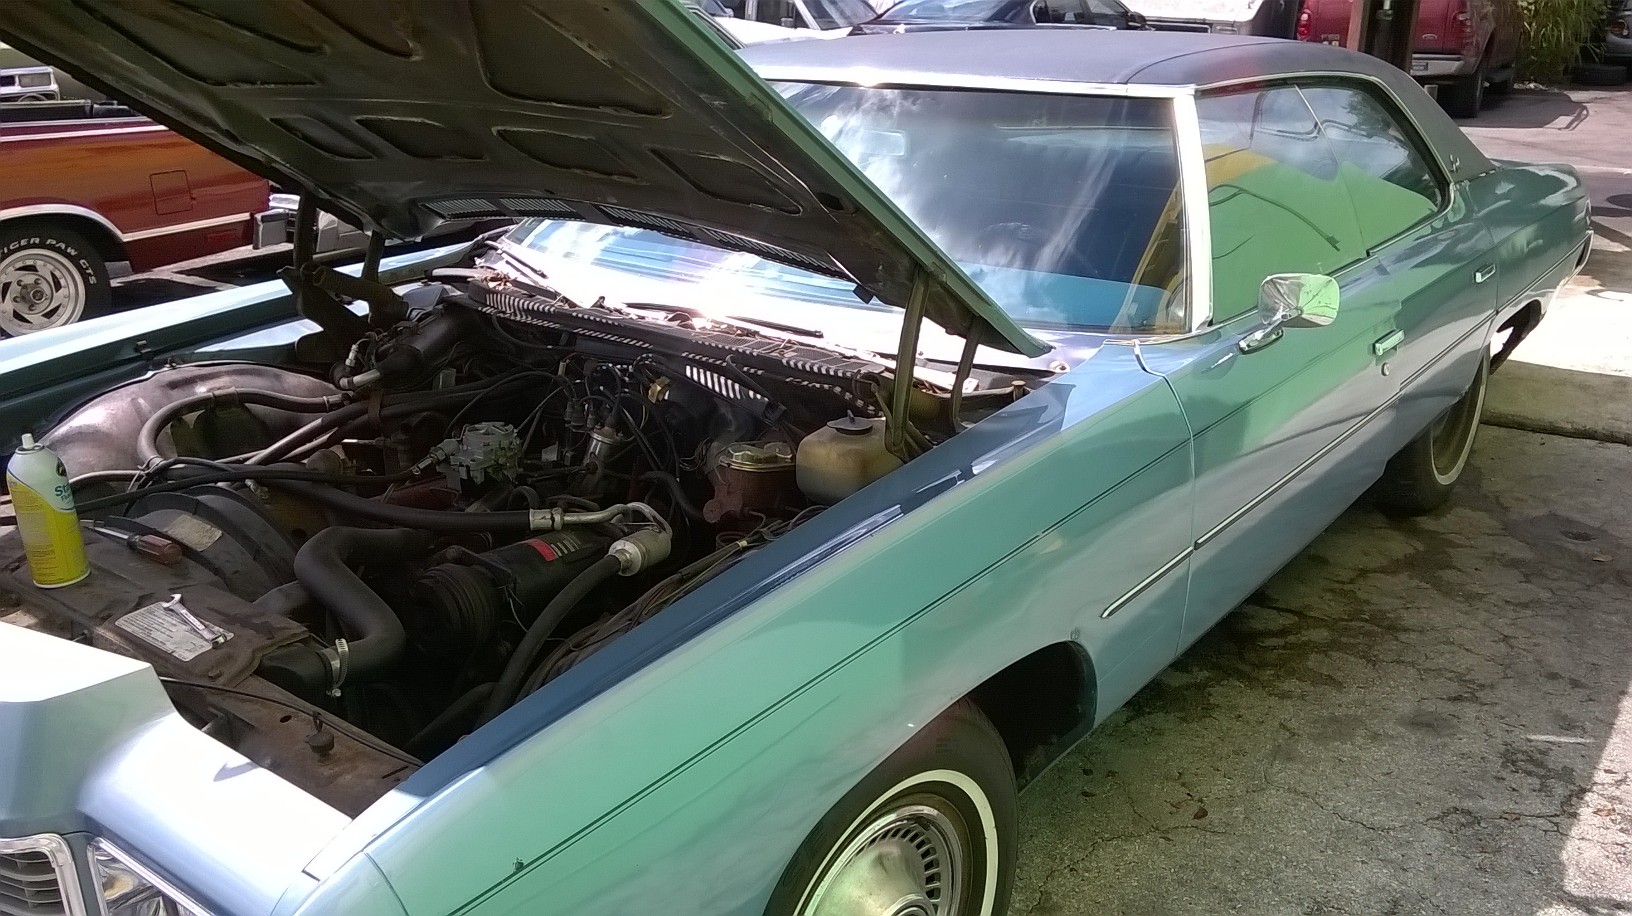 1971 Chevy Impala 350 engine